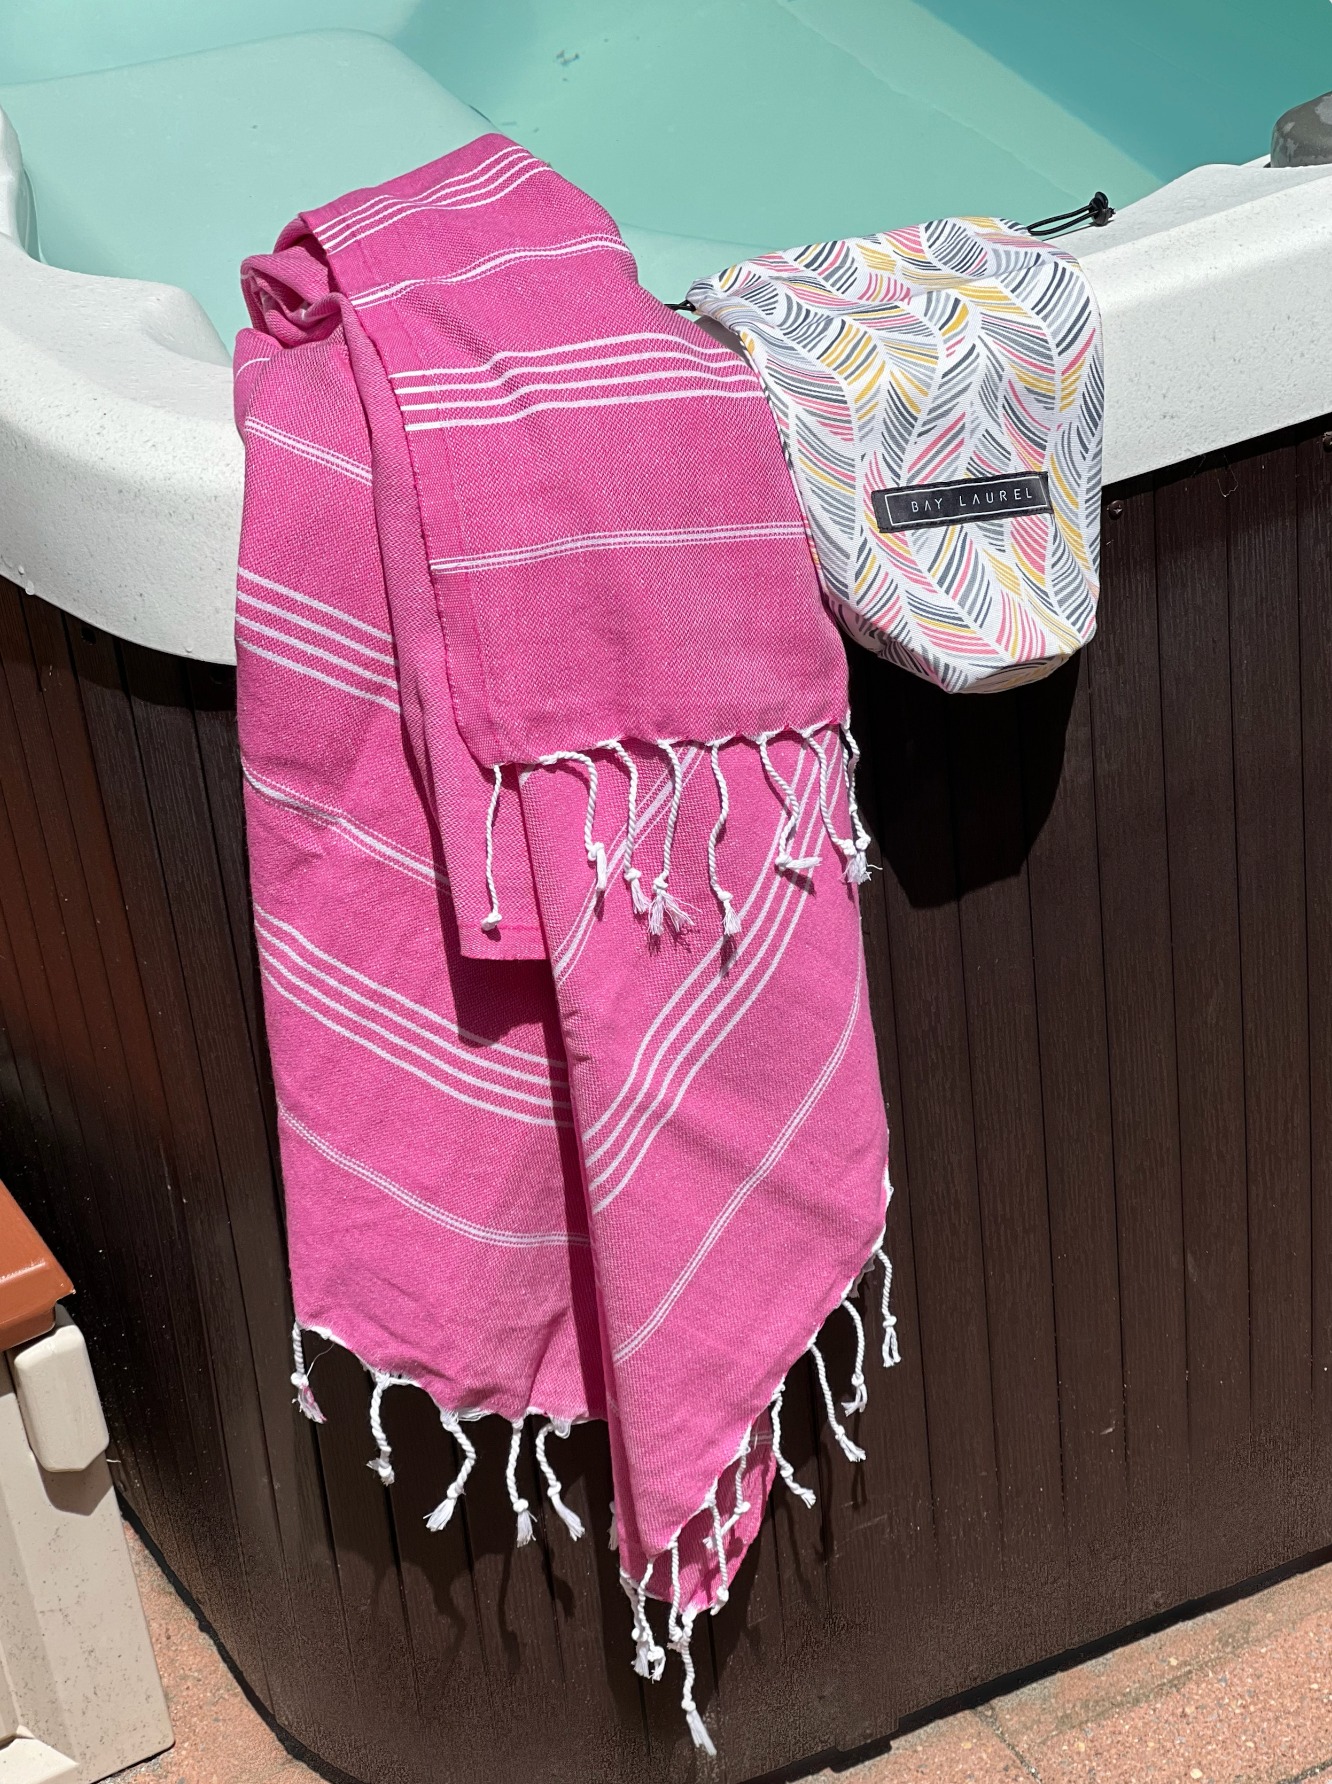 BAY LAUREL Turkish Beach Towel with Travel Bag 39 x 71 Quick Dry